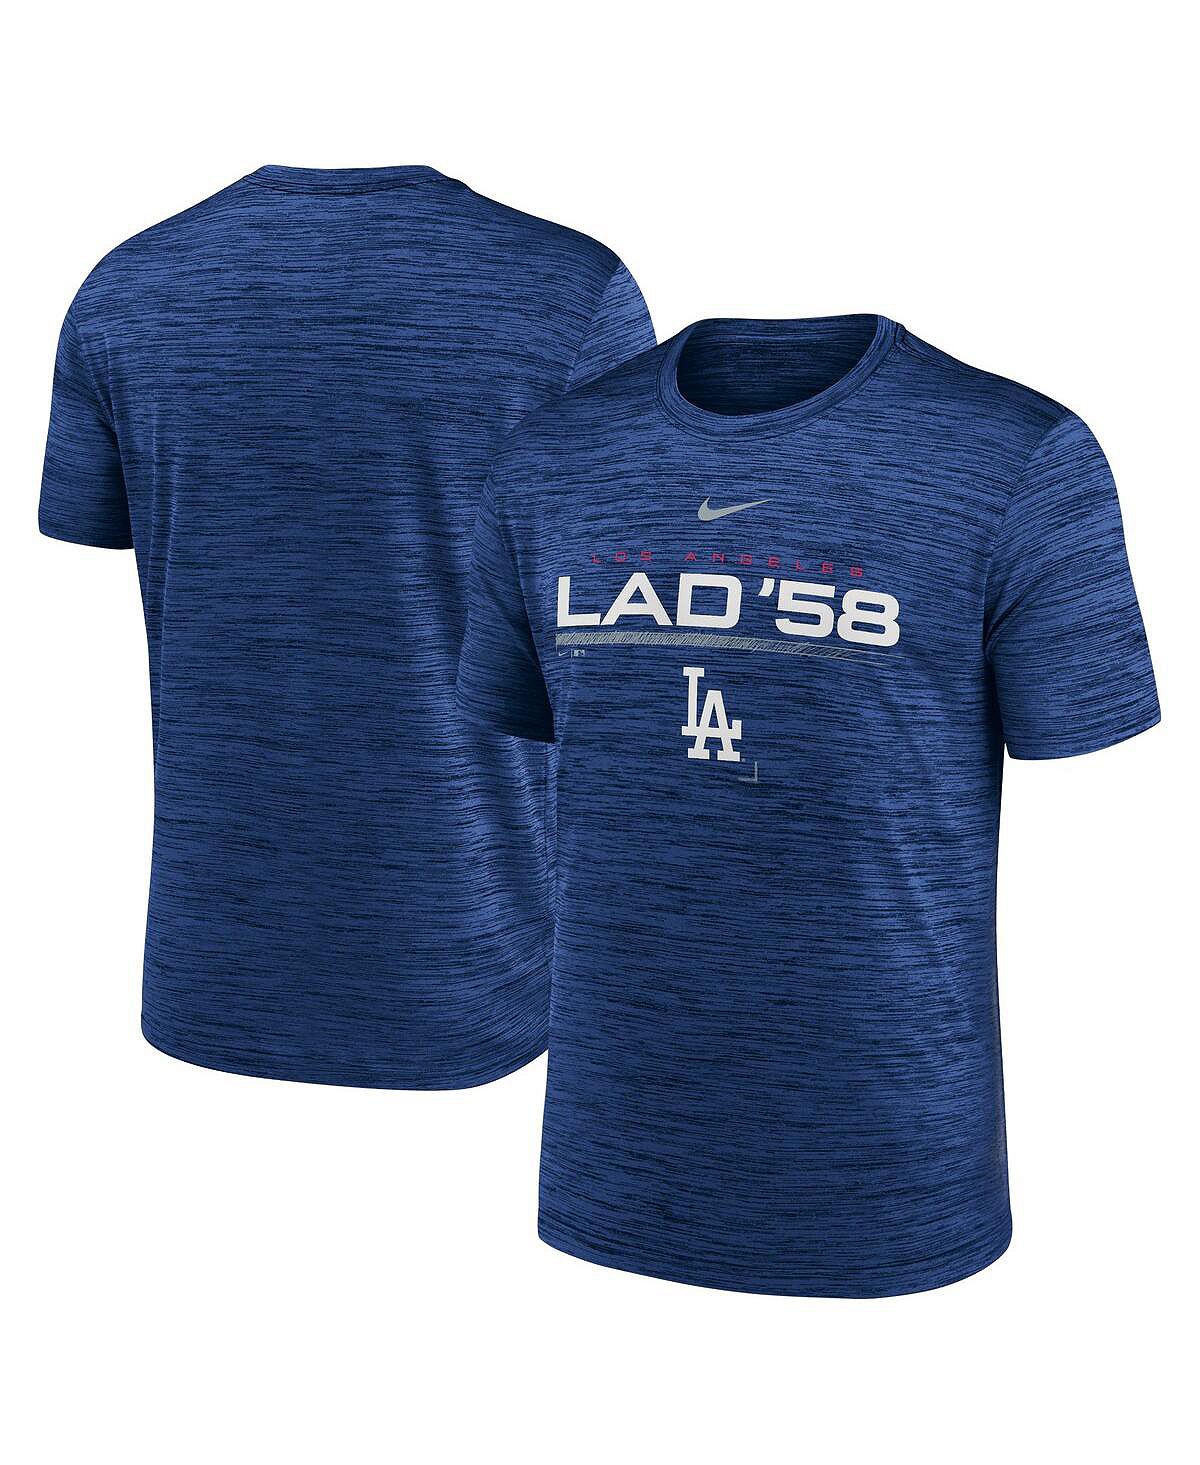 Мужская футболка Royal Los Angeles Dodgers с надписью Velocity Performance Nike printio блокнот los angeles